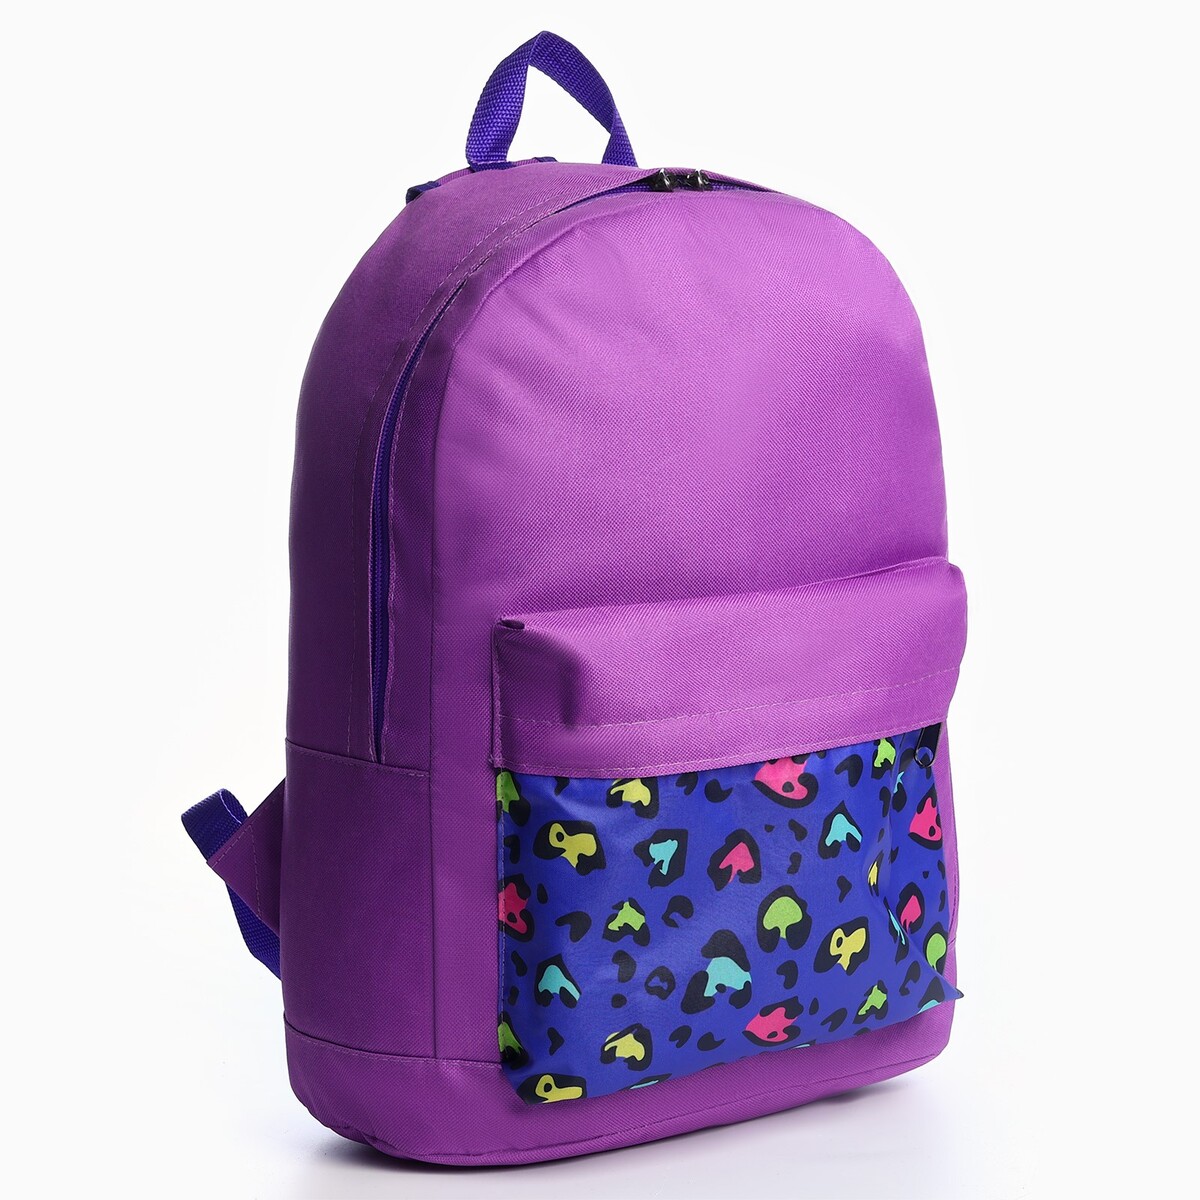 Рюкзак молод леопард, 33*13*37, отд на молнии, н/карман, фиолетовый рюкзак на молнии наружный карман фиолетовый